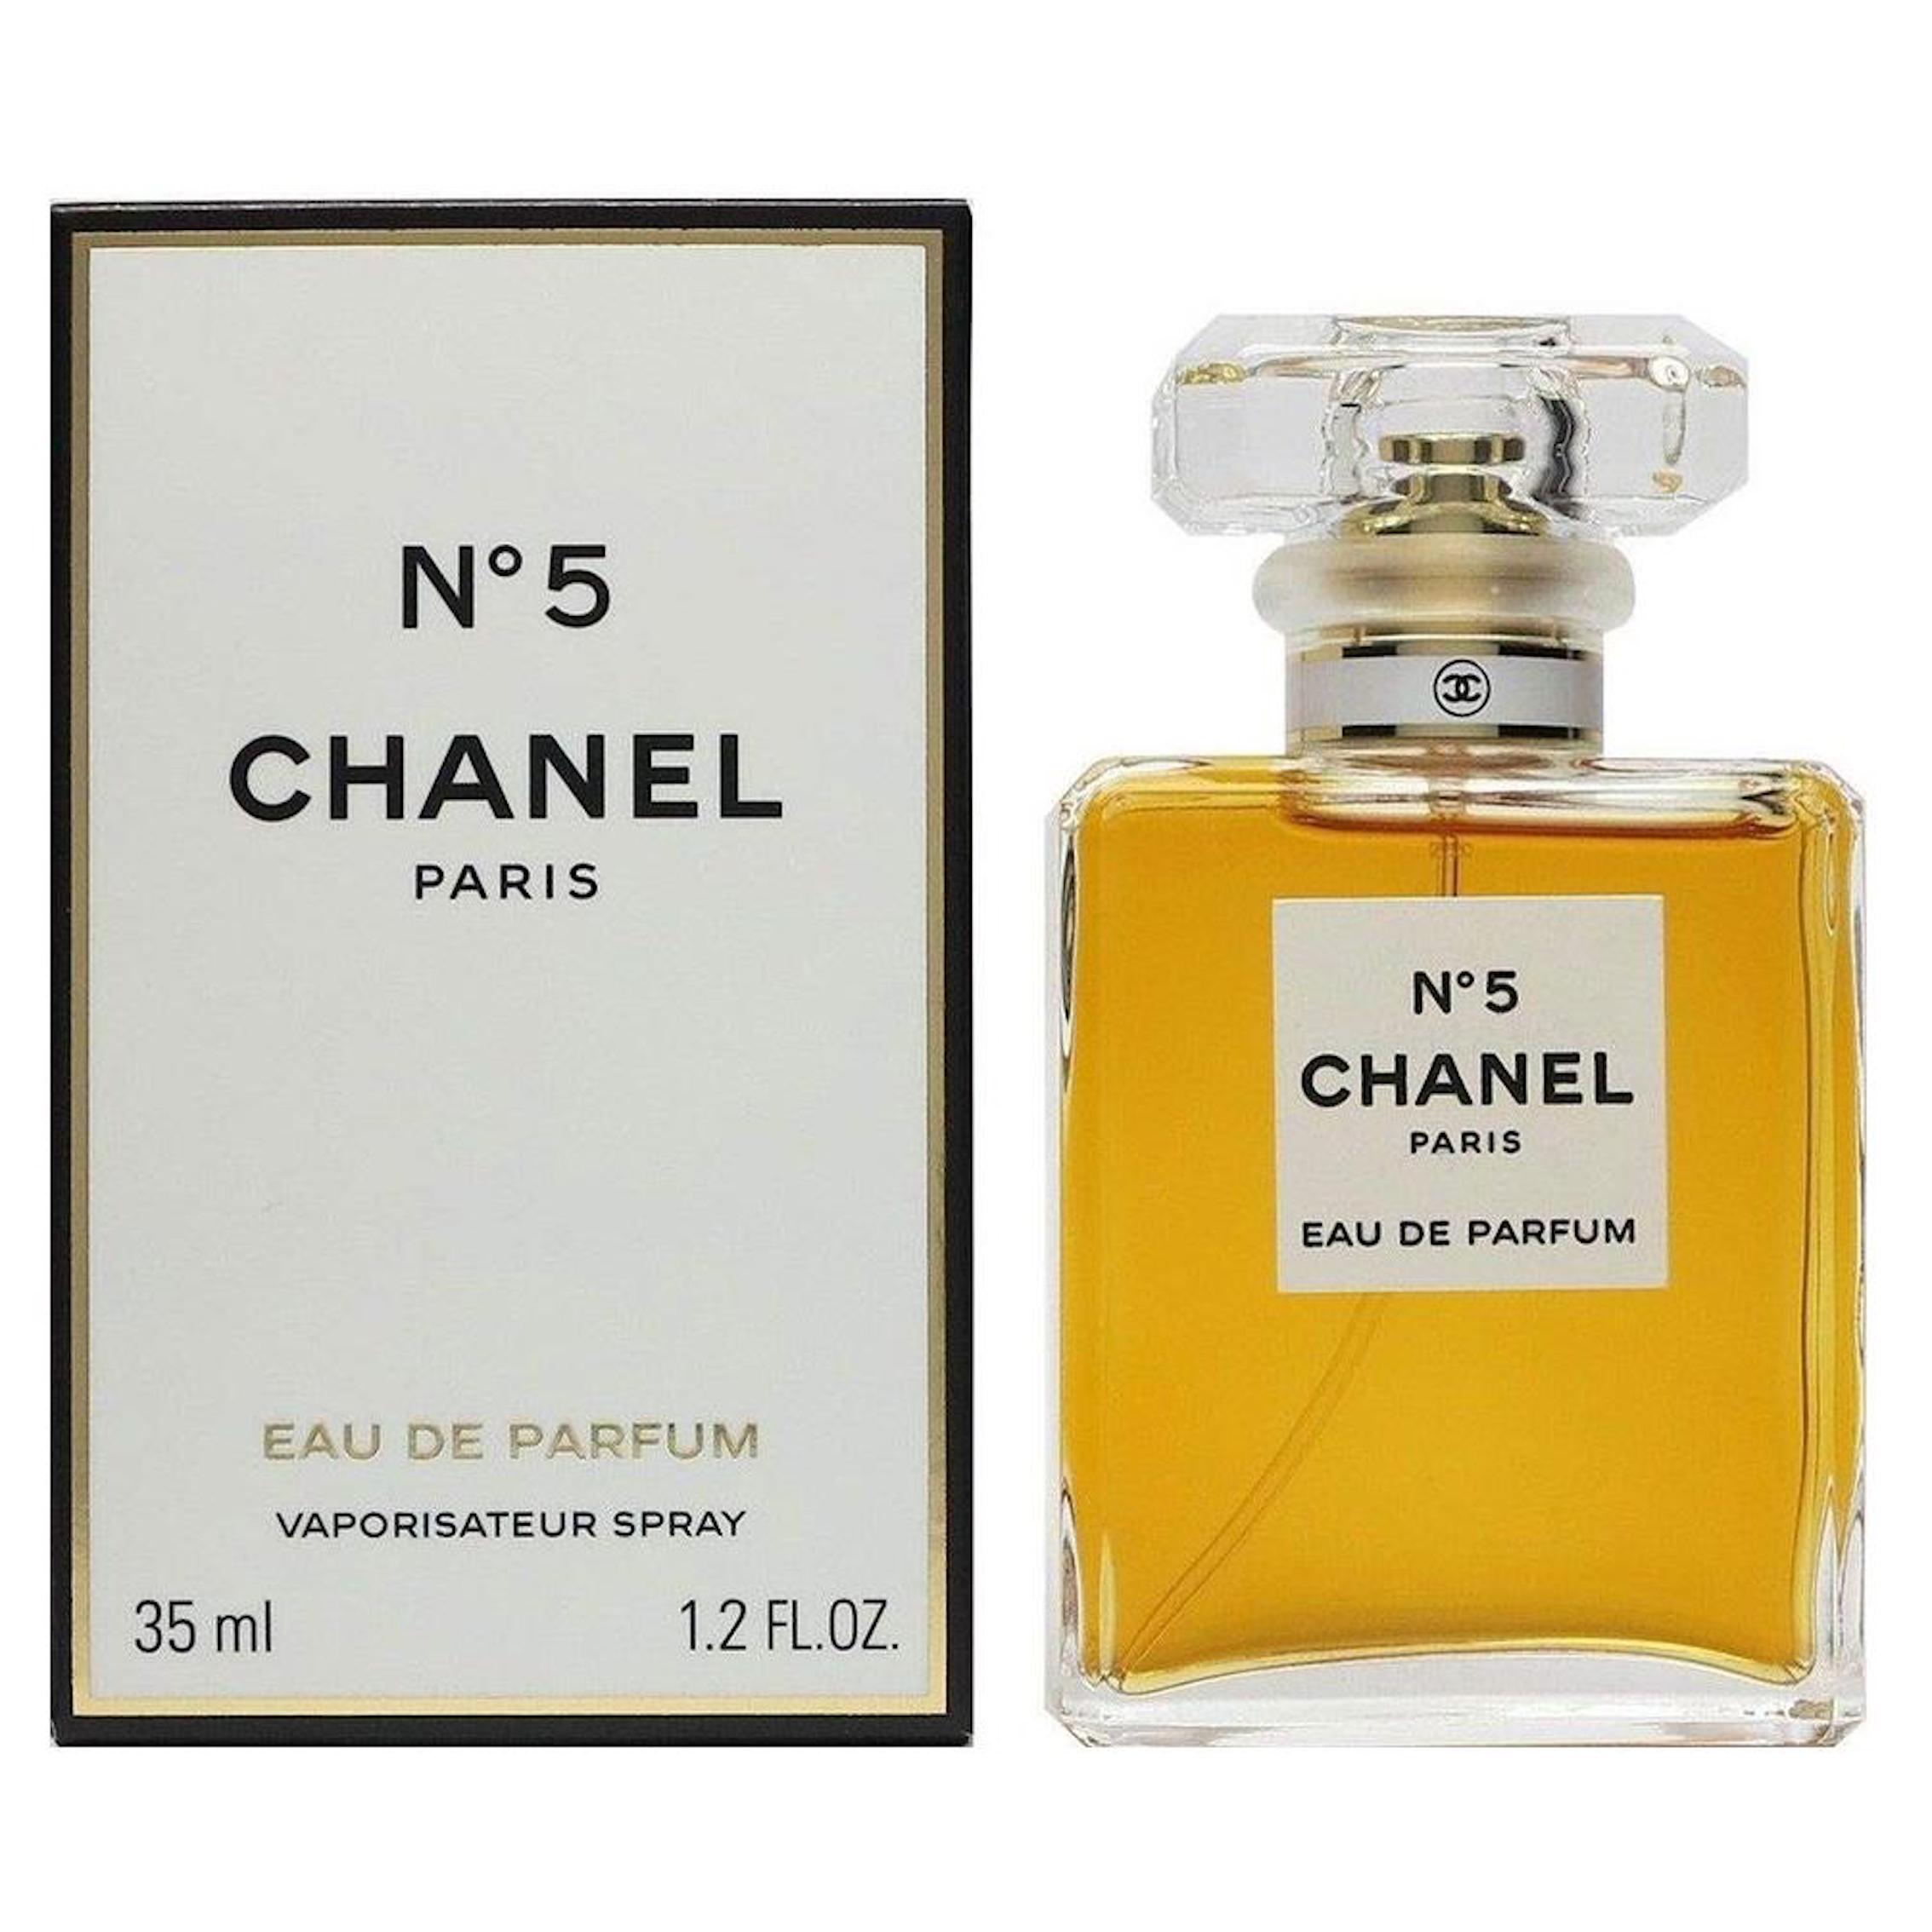 Духи шанель спб. Chanel 5 35ml. Шанель 5 35 мл. Chanel n 5 Parfum 35 ml. Chanel no 5 Parfum.